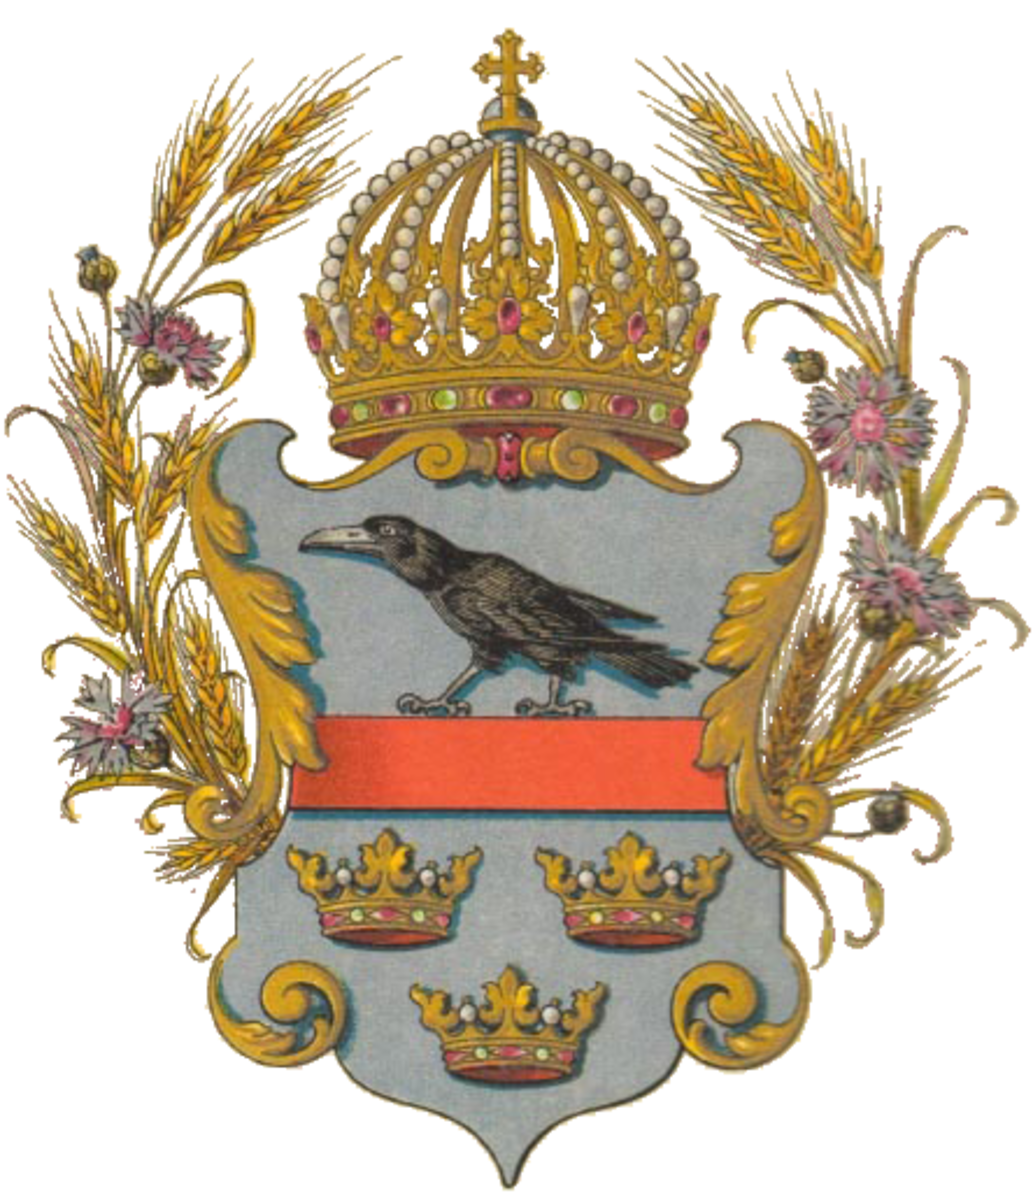 The impressive coat of arms of the 19th century Kingdom of Galicia-Lodomeria.